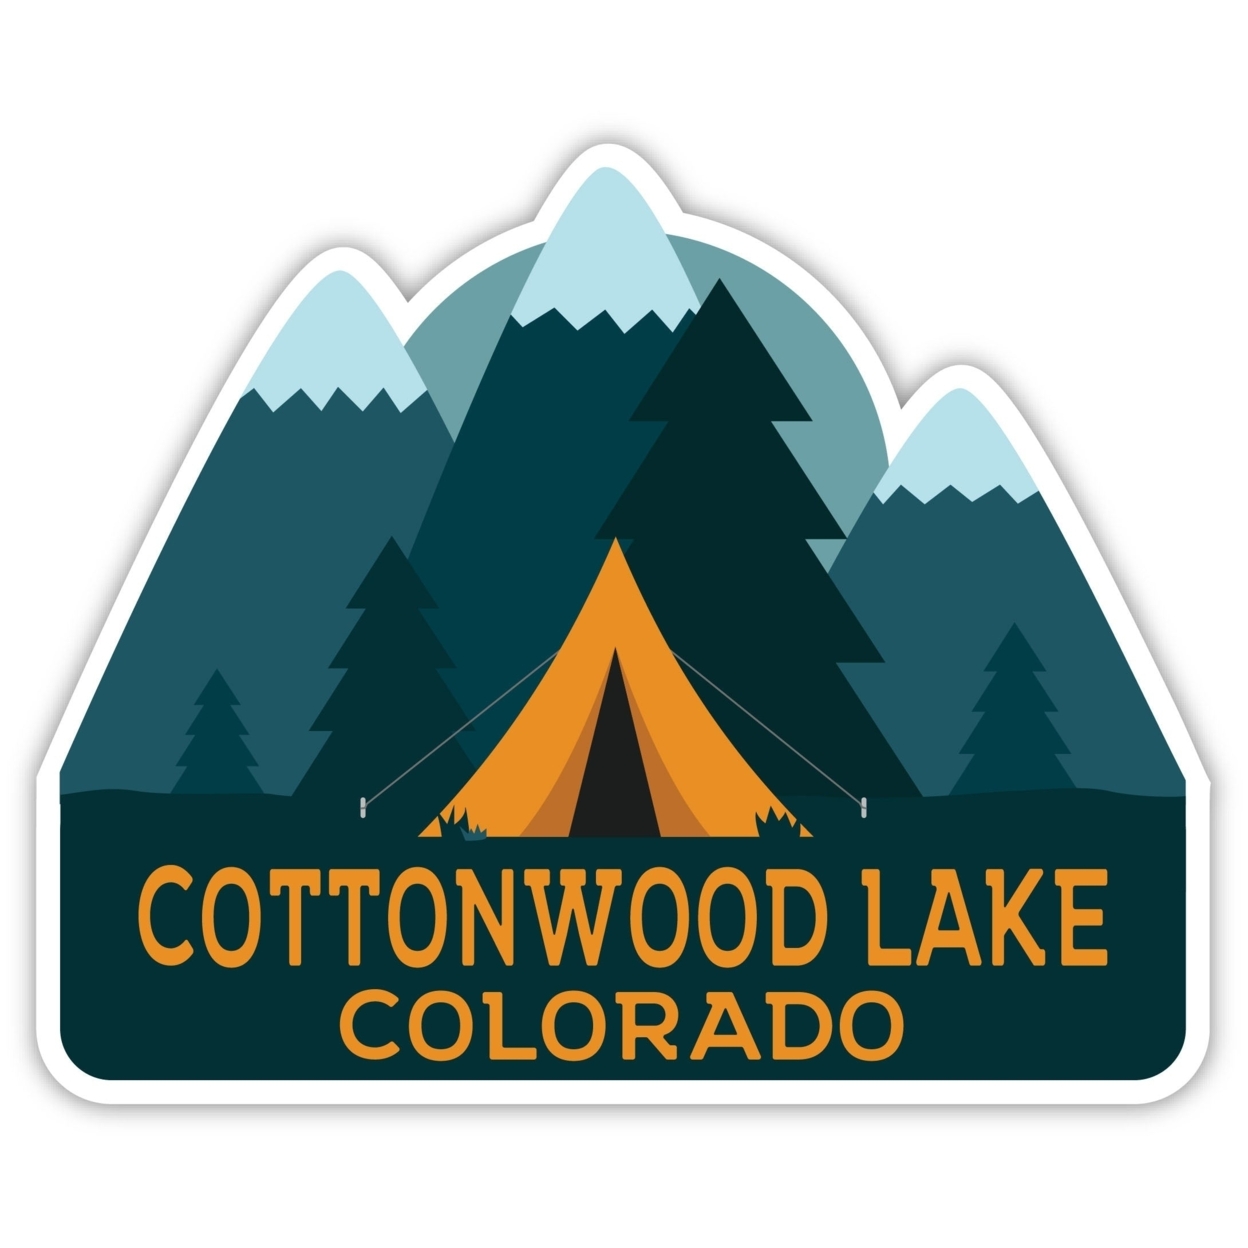 Cottonwood Lake Colorado Souvenir Decorative Stickers (Choose Theme And Size) - Single Unit, 10-Inch, Tent